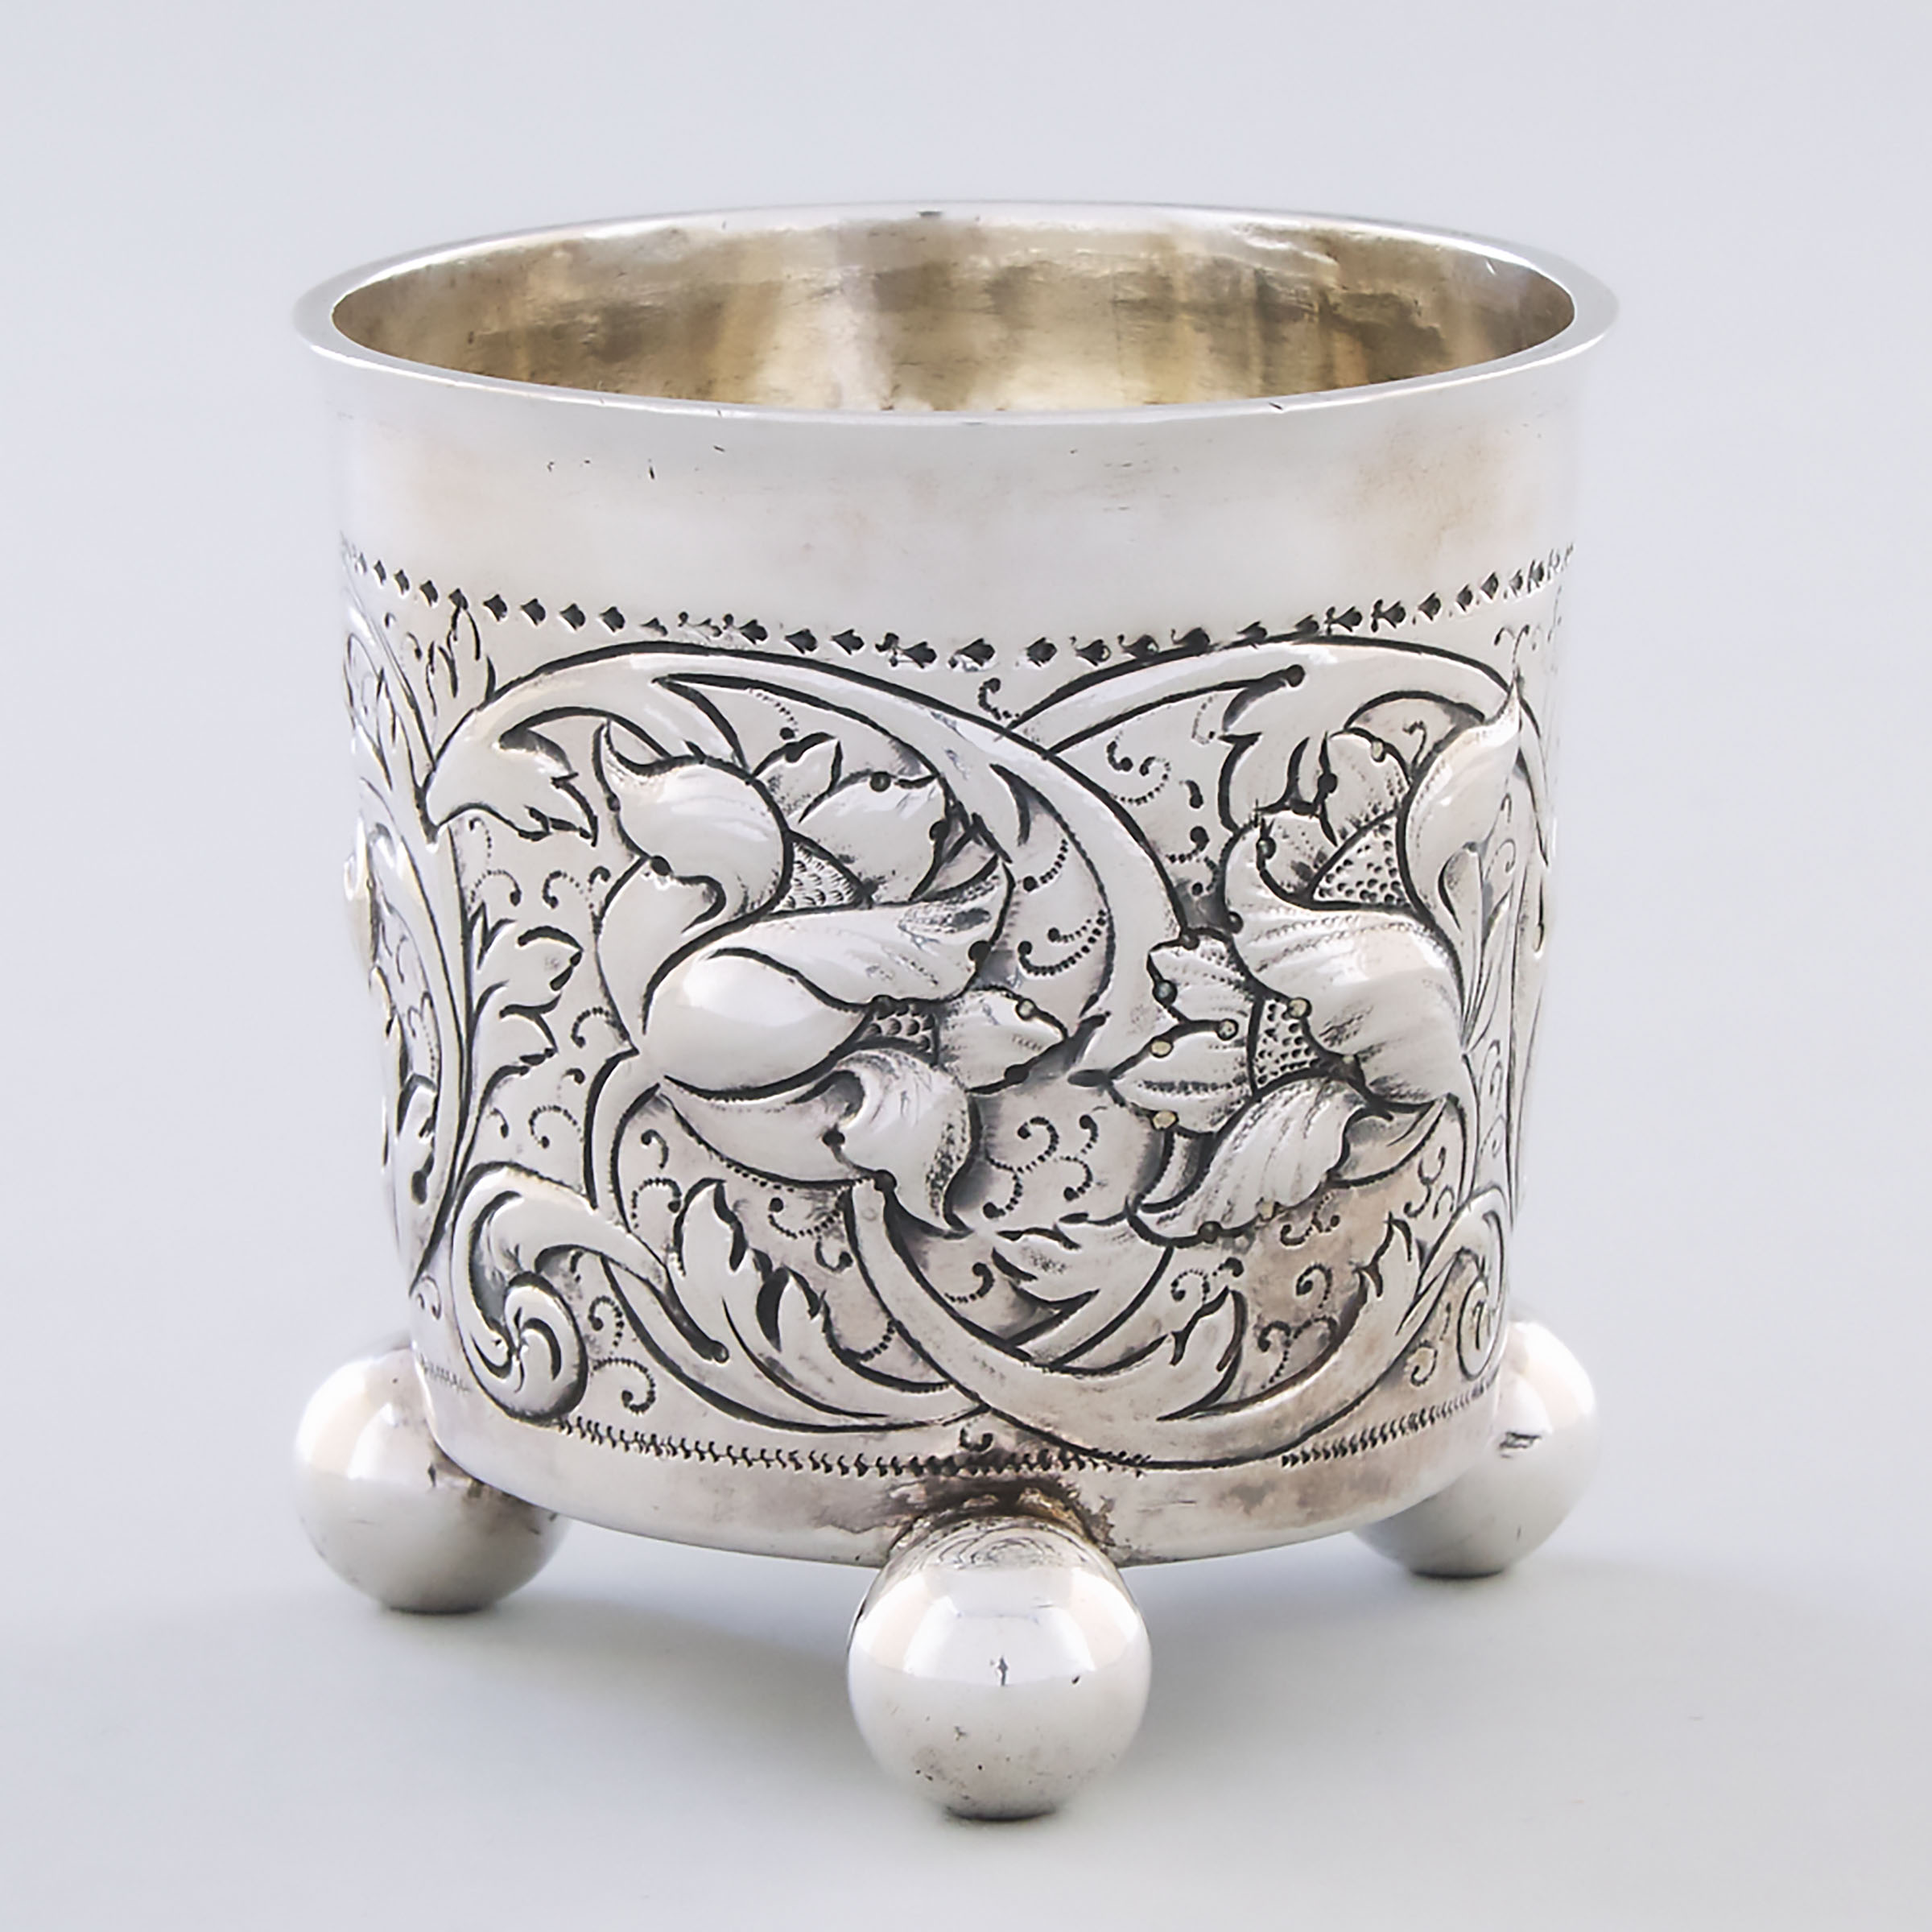 North European Silver Beaker, c.1723